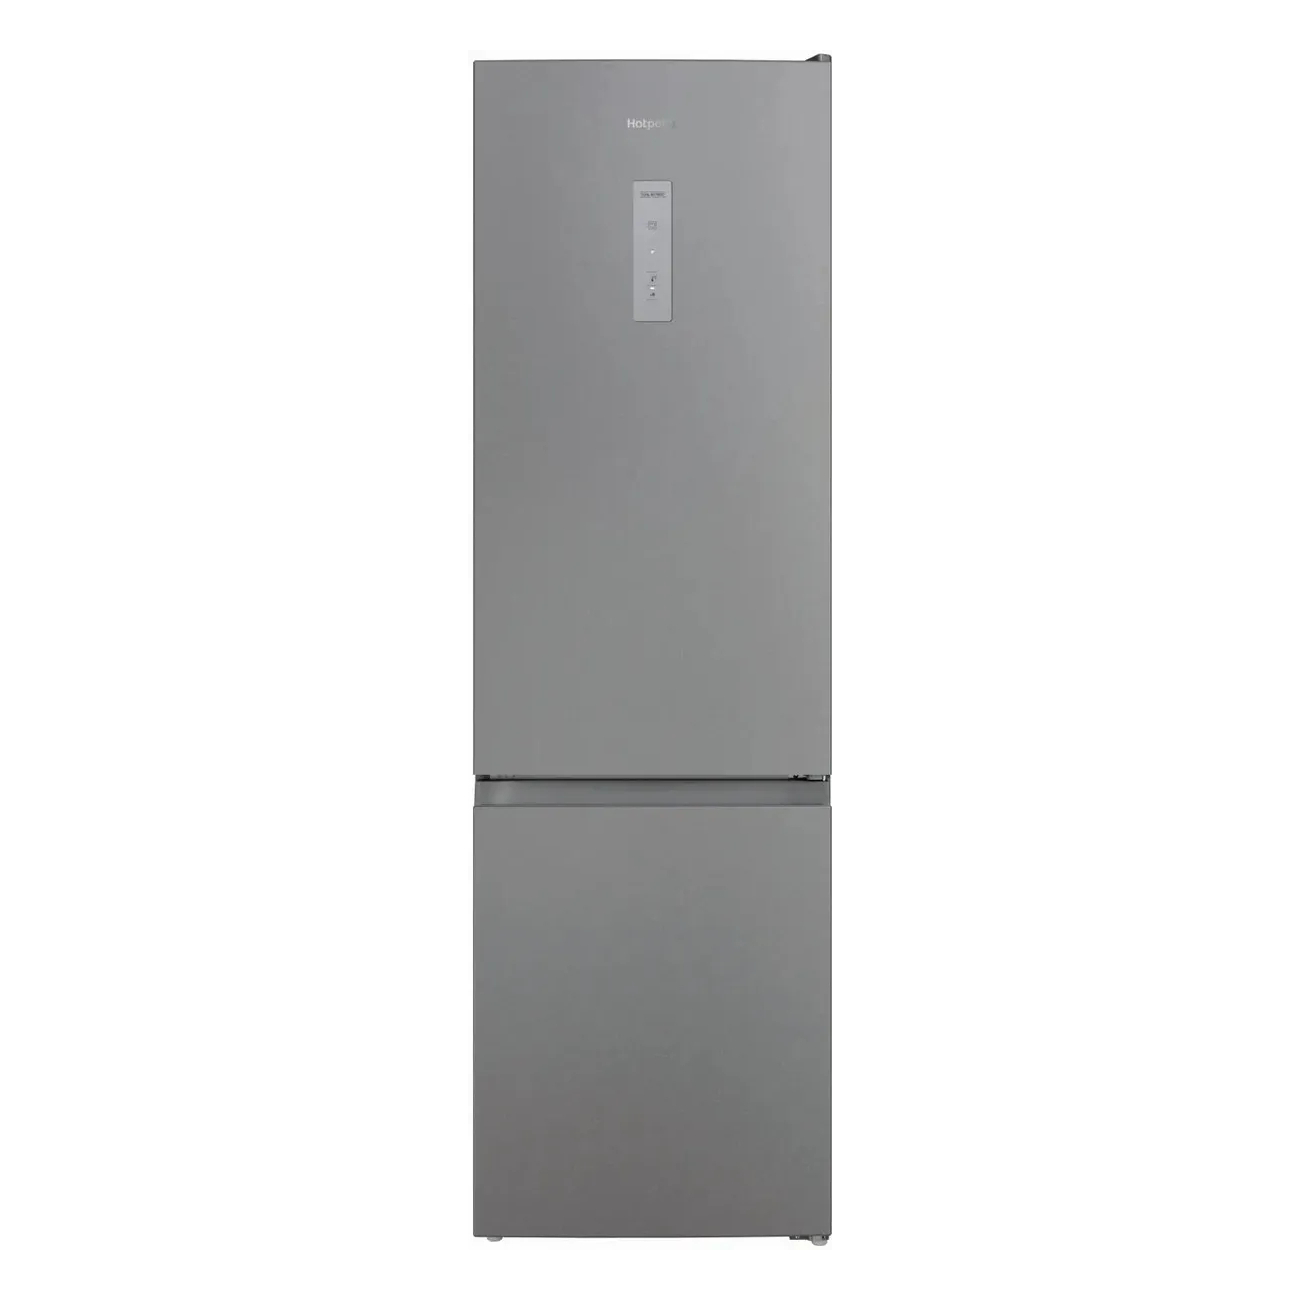 Холодильник HotPoint HT 5200 S серебристый двухкамерный холодильник hotpoint hts 4200 s серебристый